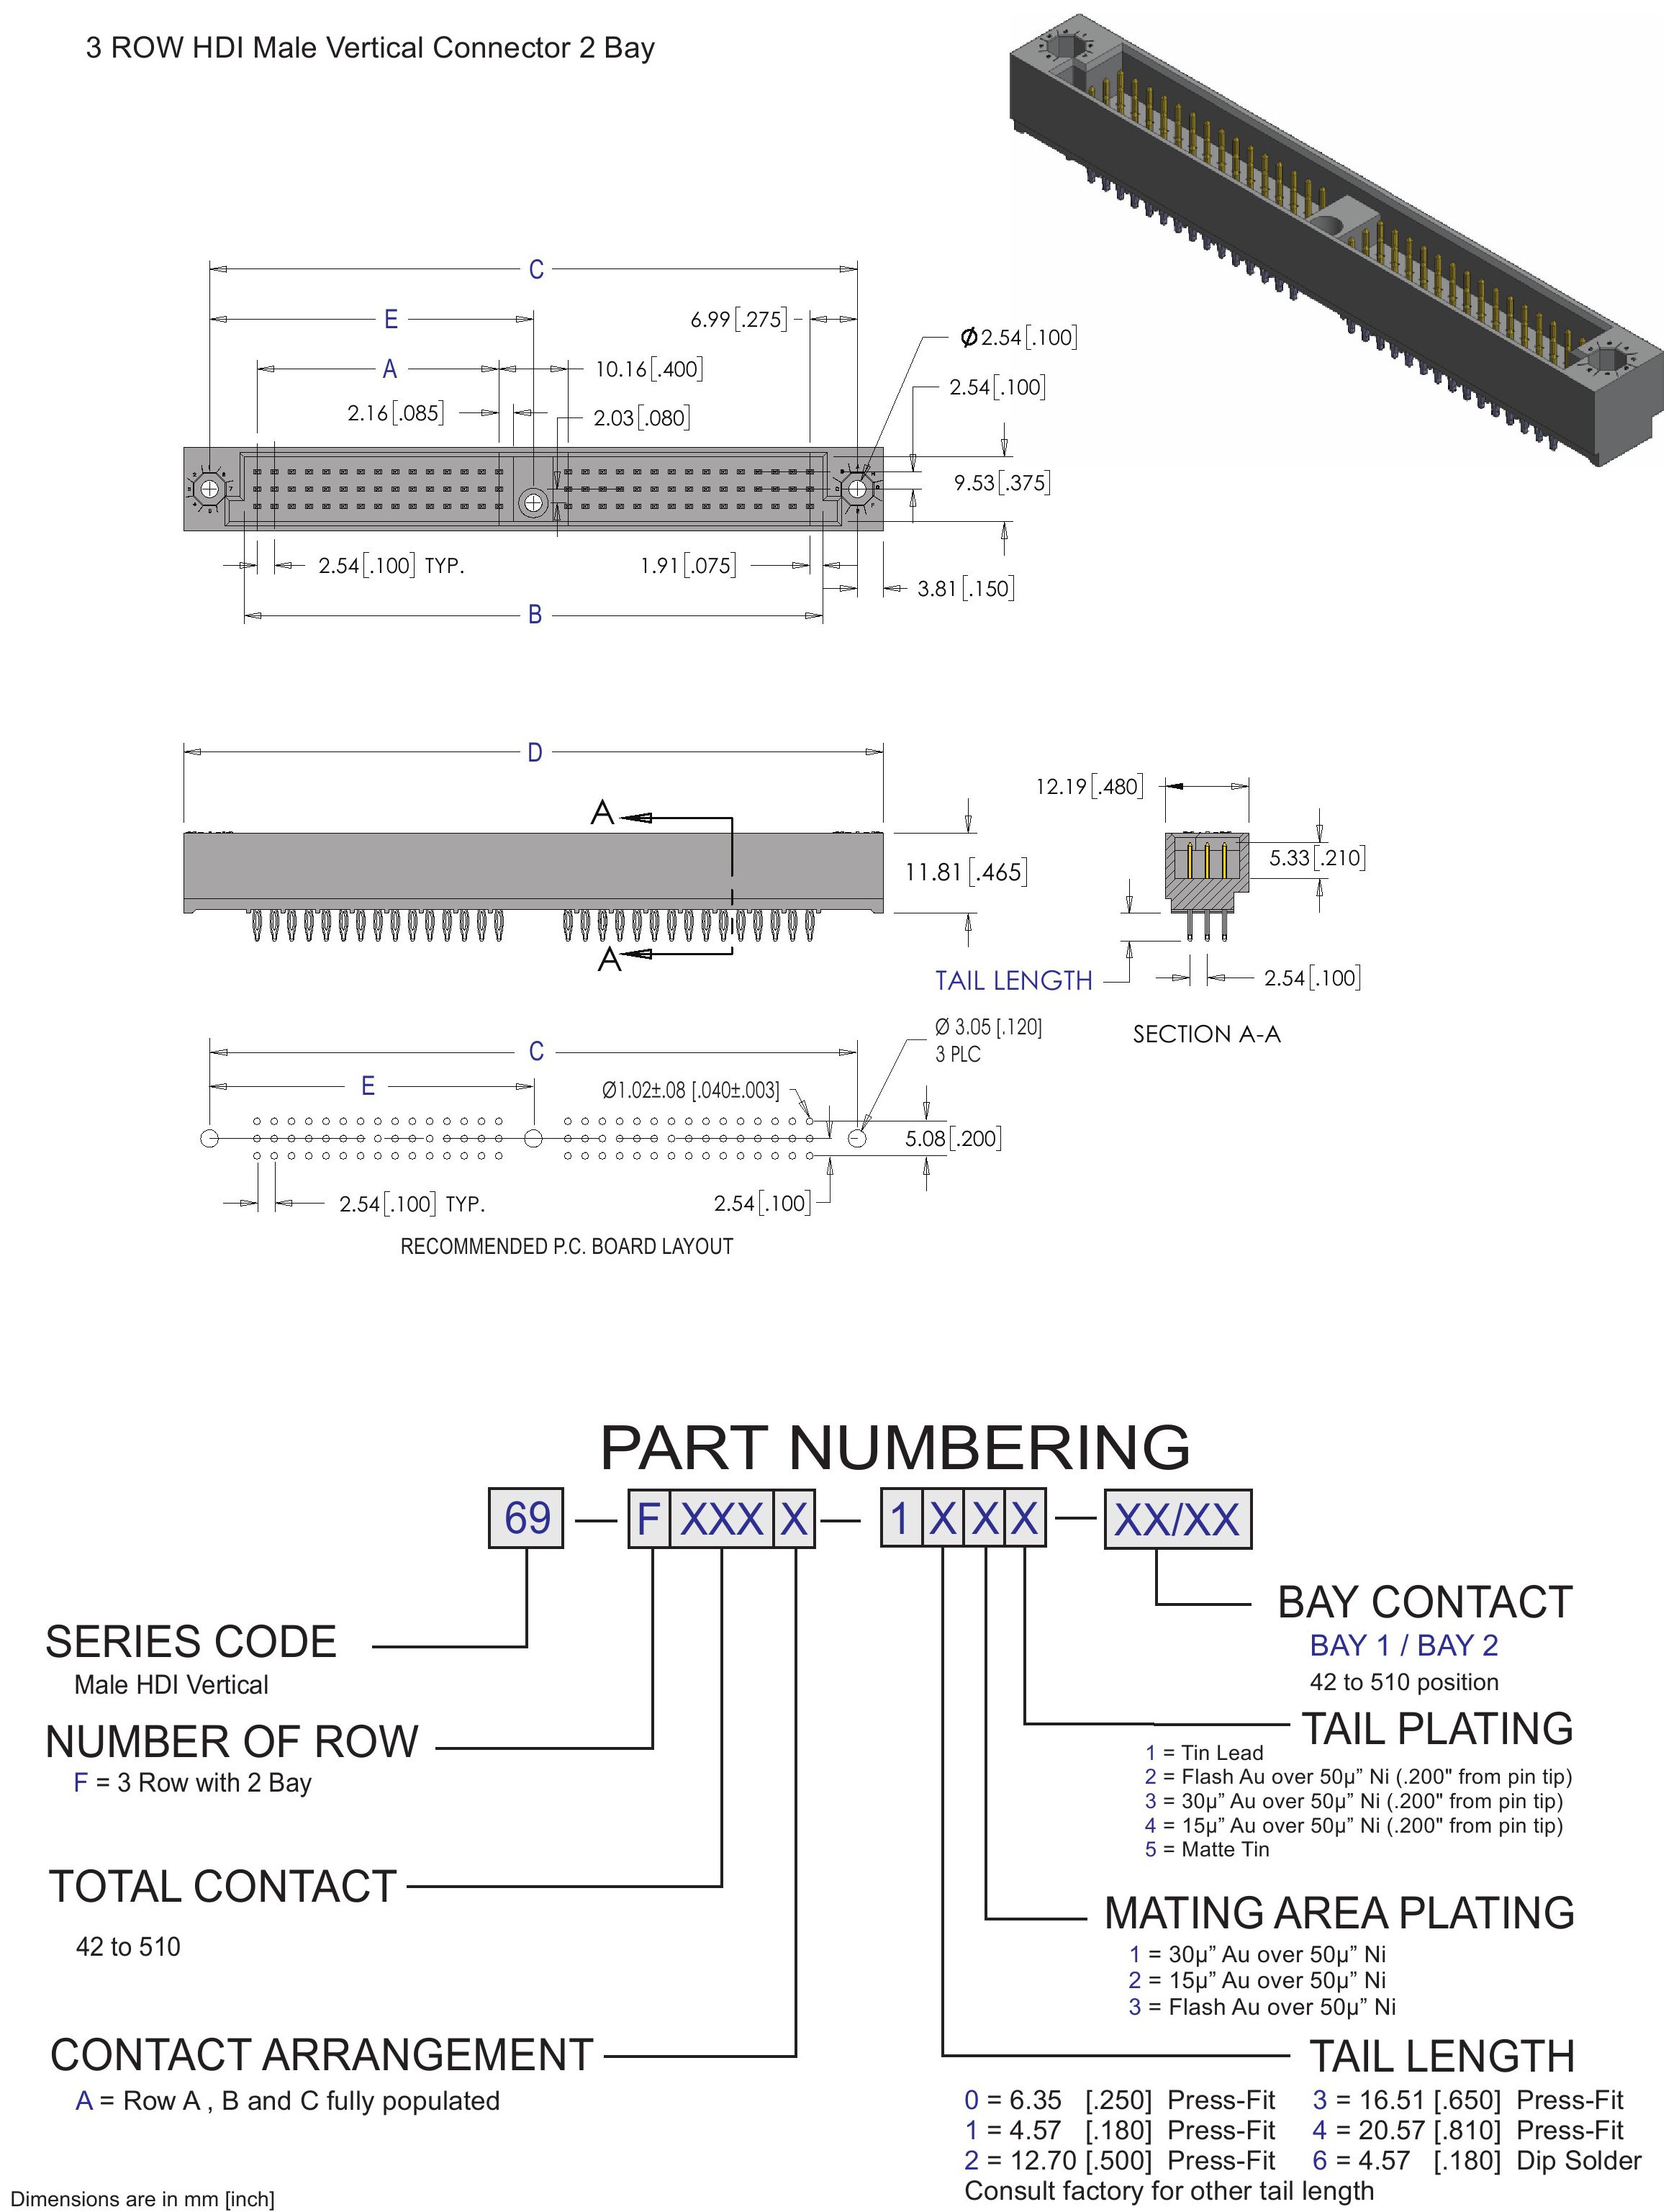 ECS 3 Row HDI Male Vertical 2 Bay Connector